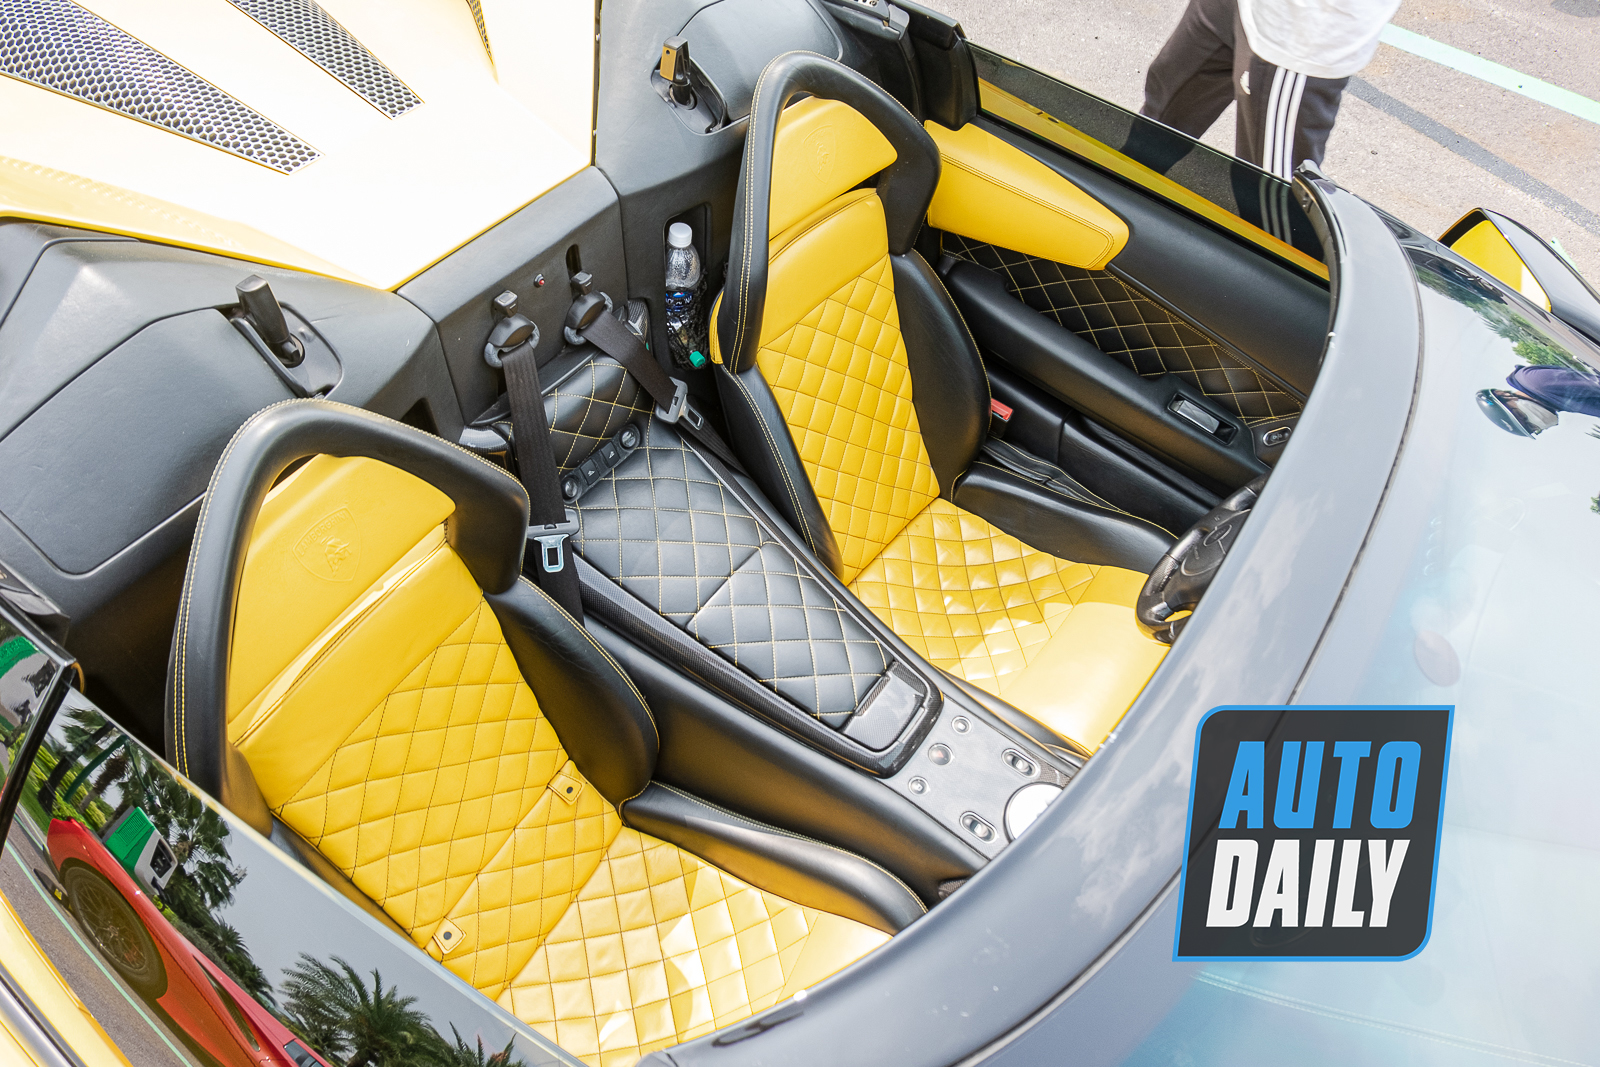 Chi tiết Lamborghini Murcielago Roadster 14 năm tuổi của doanh nhân Gia Lai lamborghini-murcielago-roadster-autodaily-13.JPG